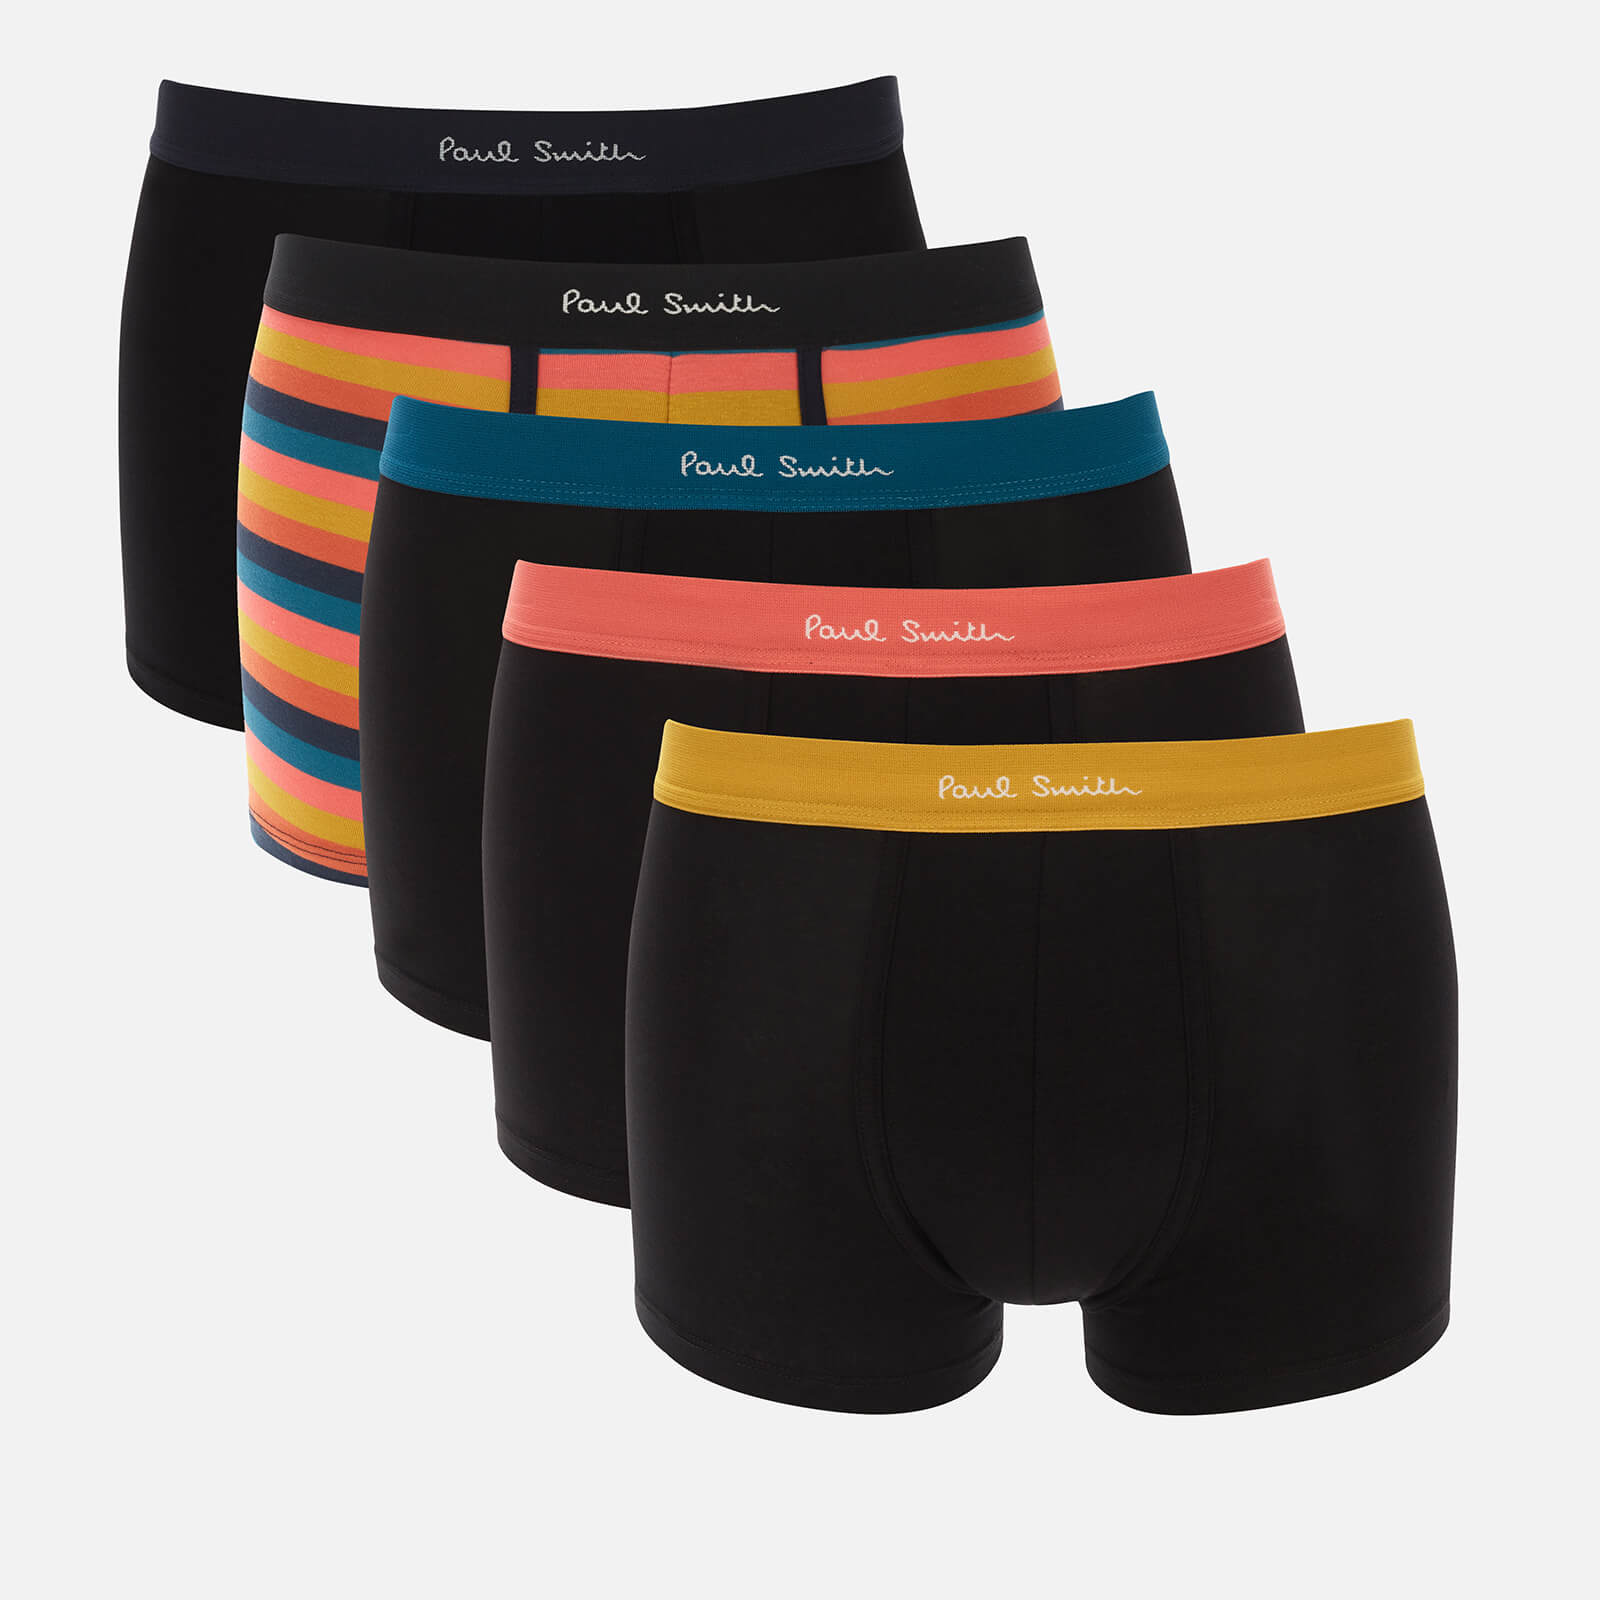 Paul Smith Loungewear Men's 5 Pack Stripe Mix Boxer Shorts - Multi 2 - S von PS Paul Smith